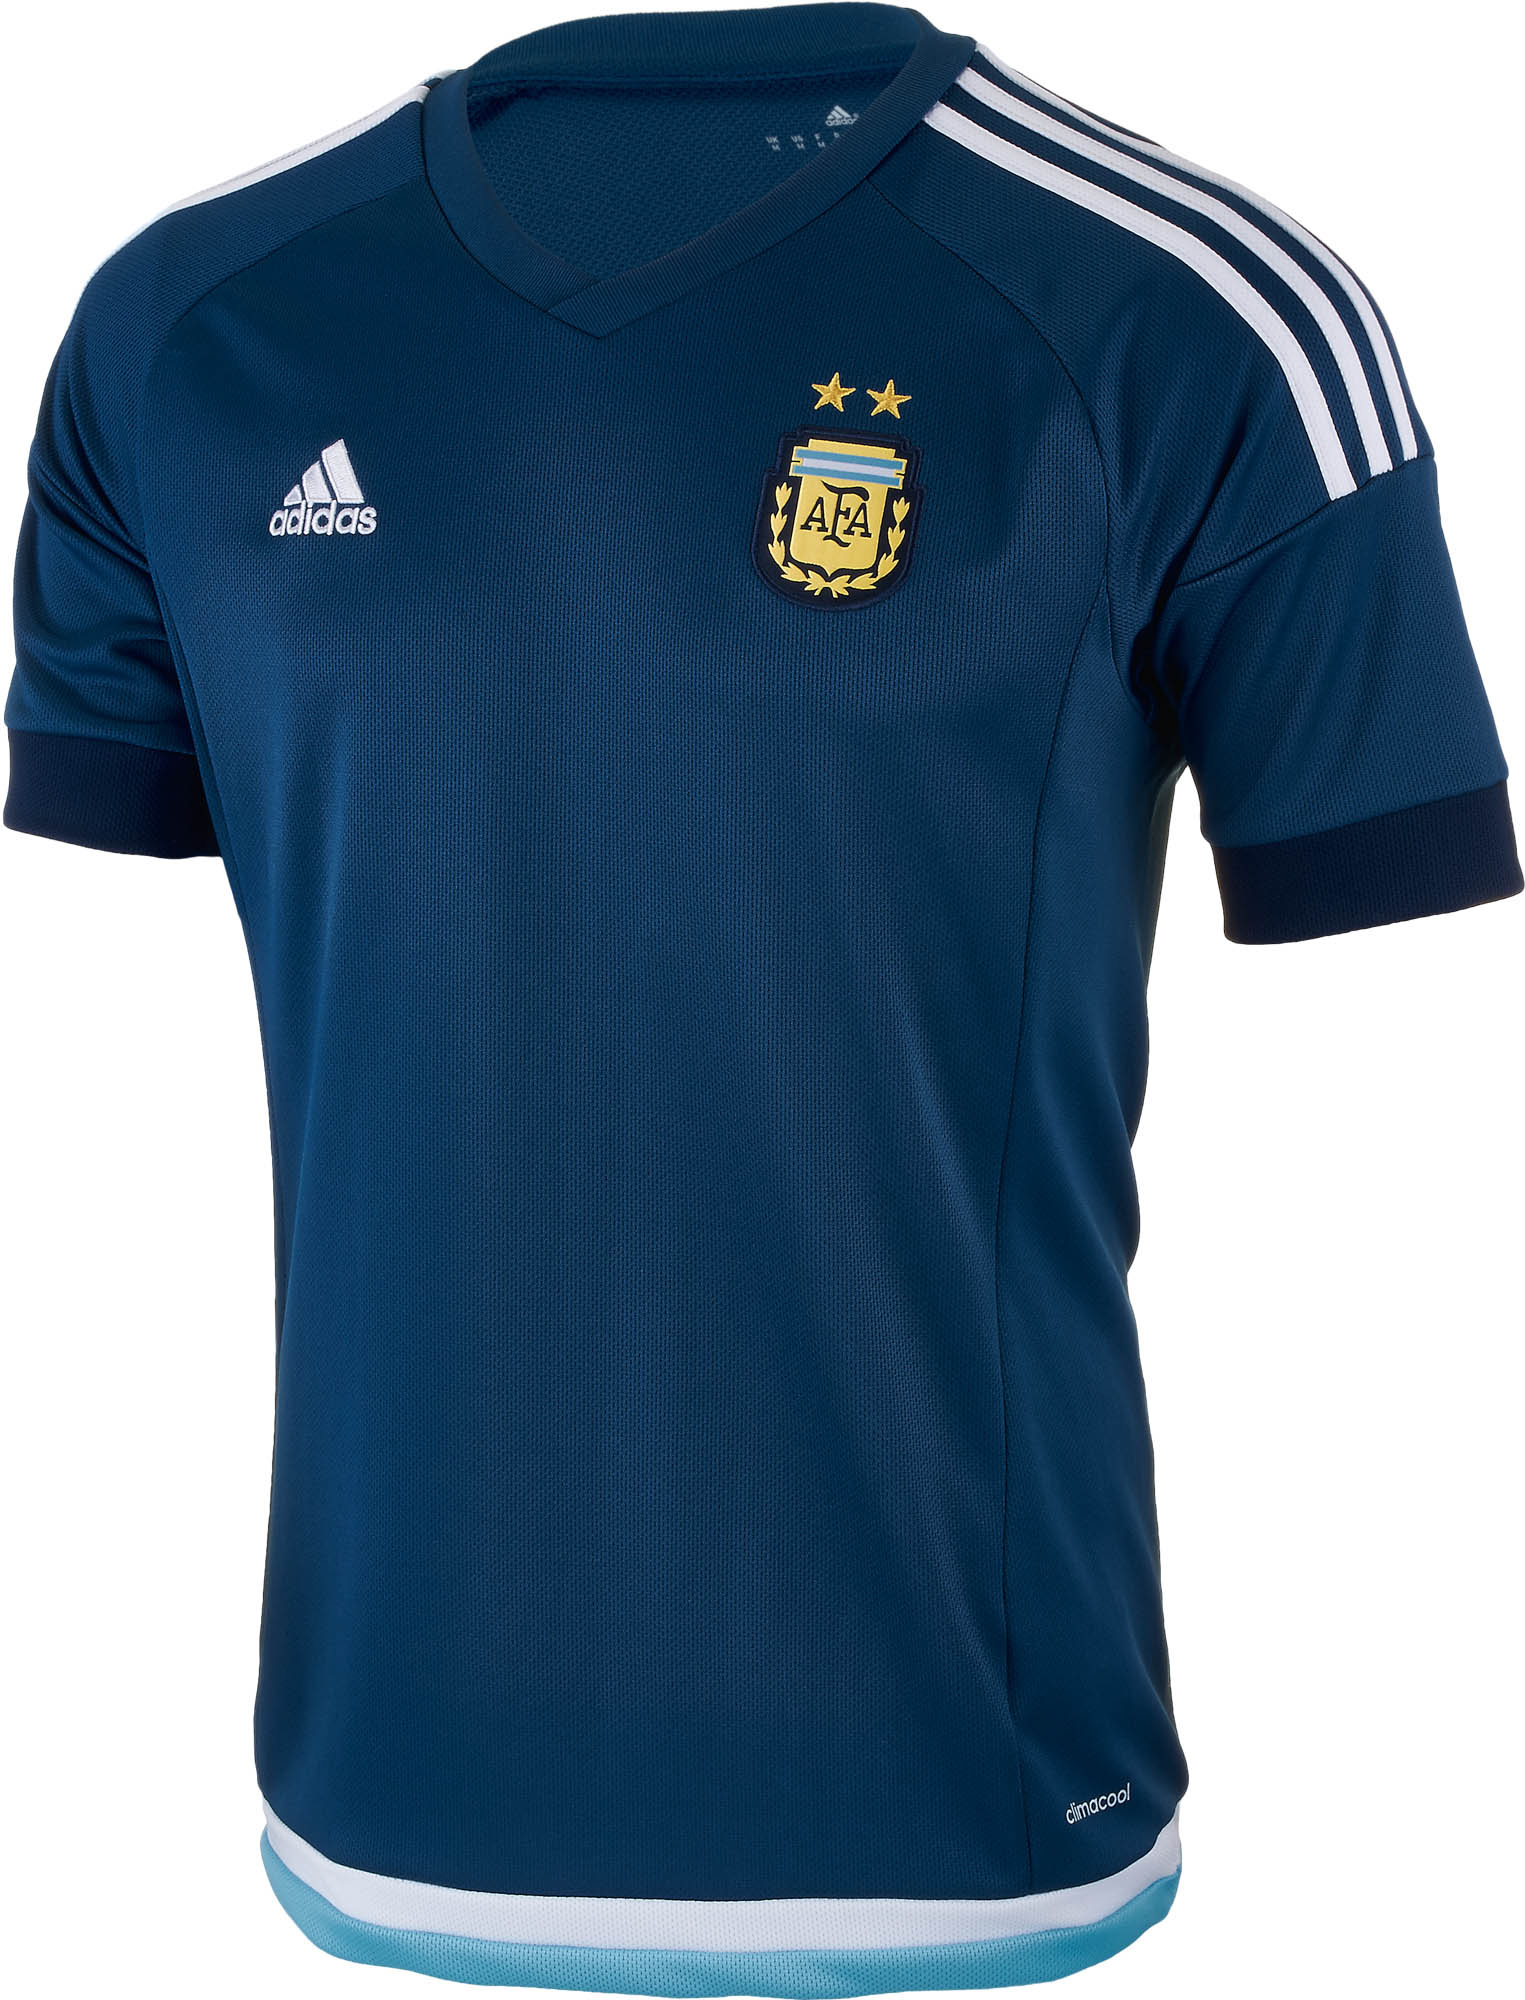 argentina jersey sale